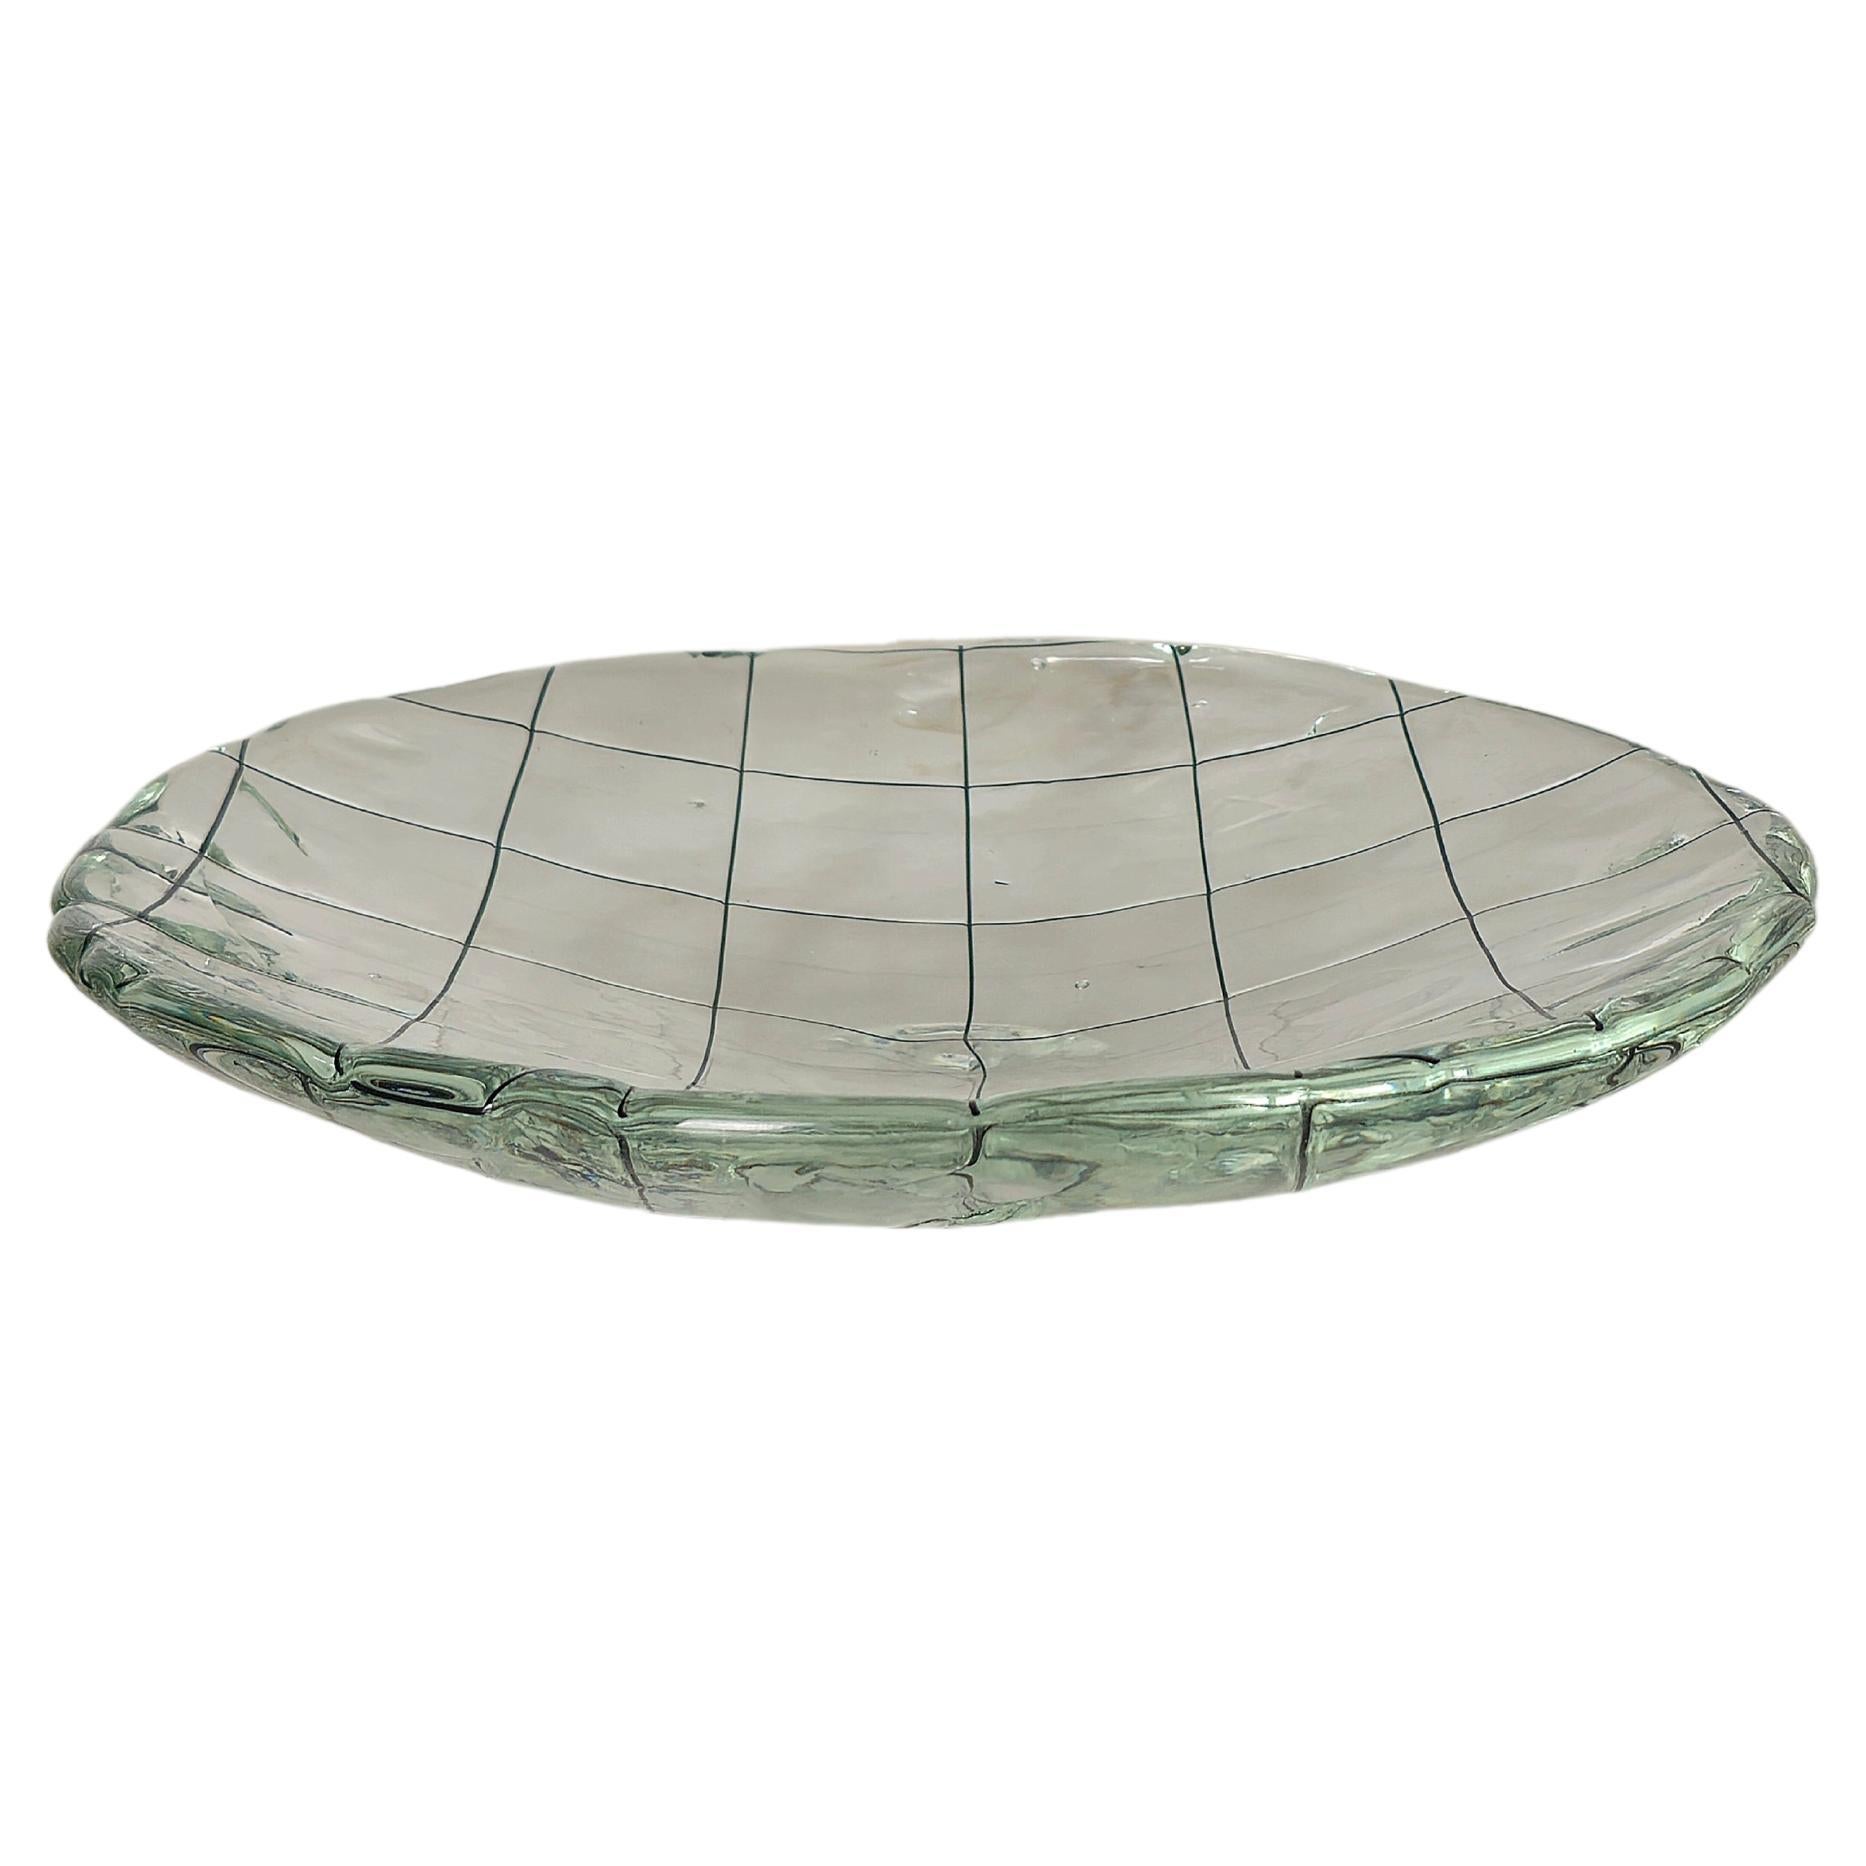 Decorative Dish Murano Glass Circular Midcentury Modern Italian Design 1950s